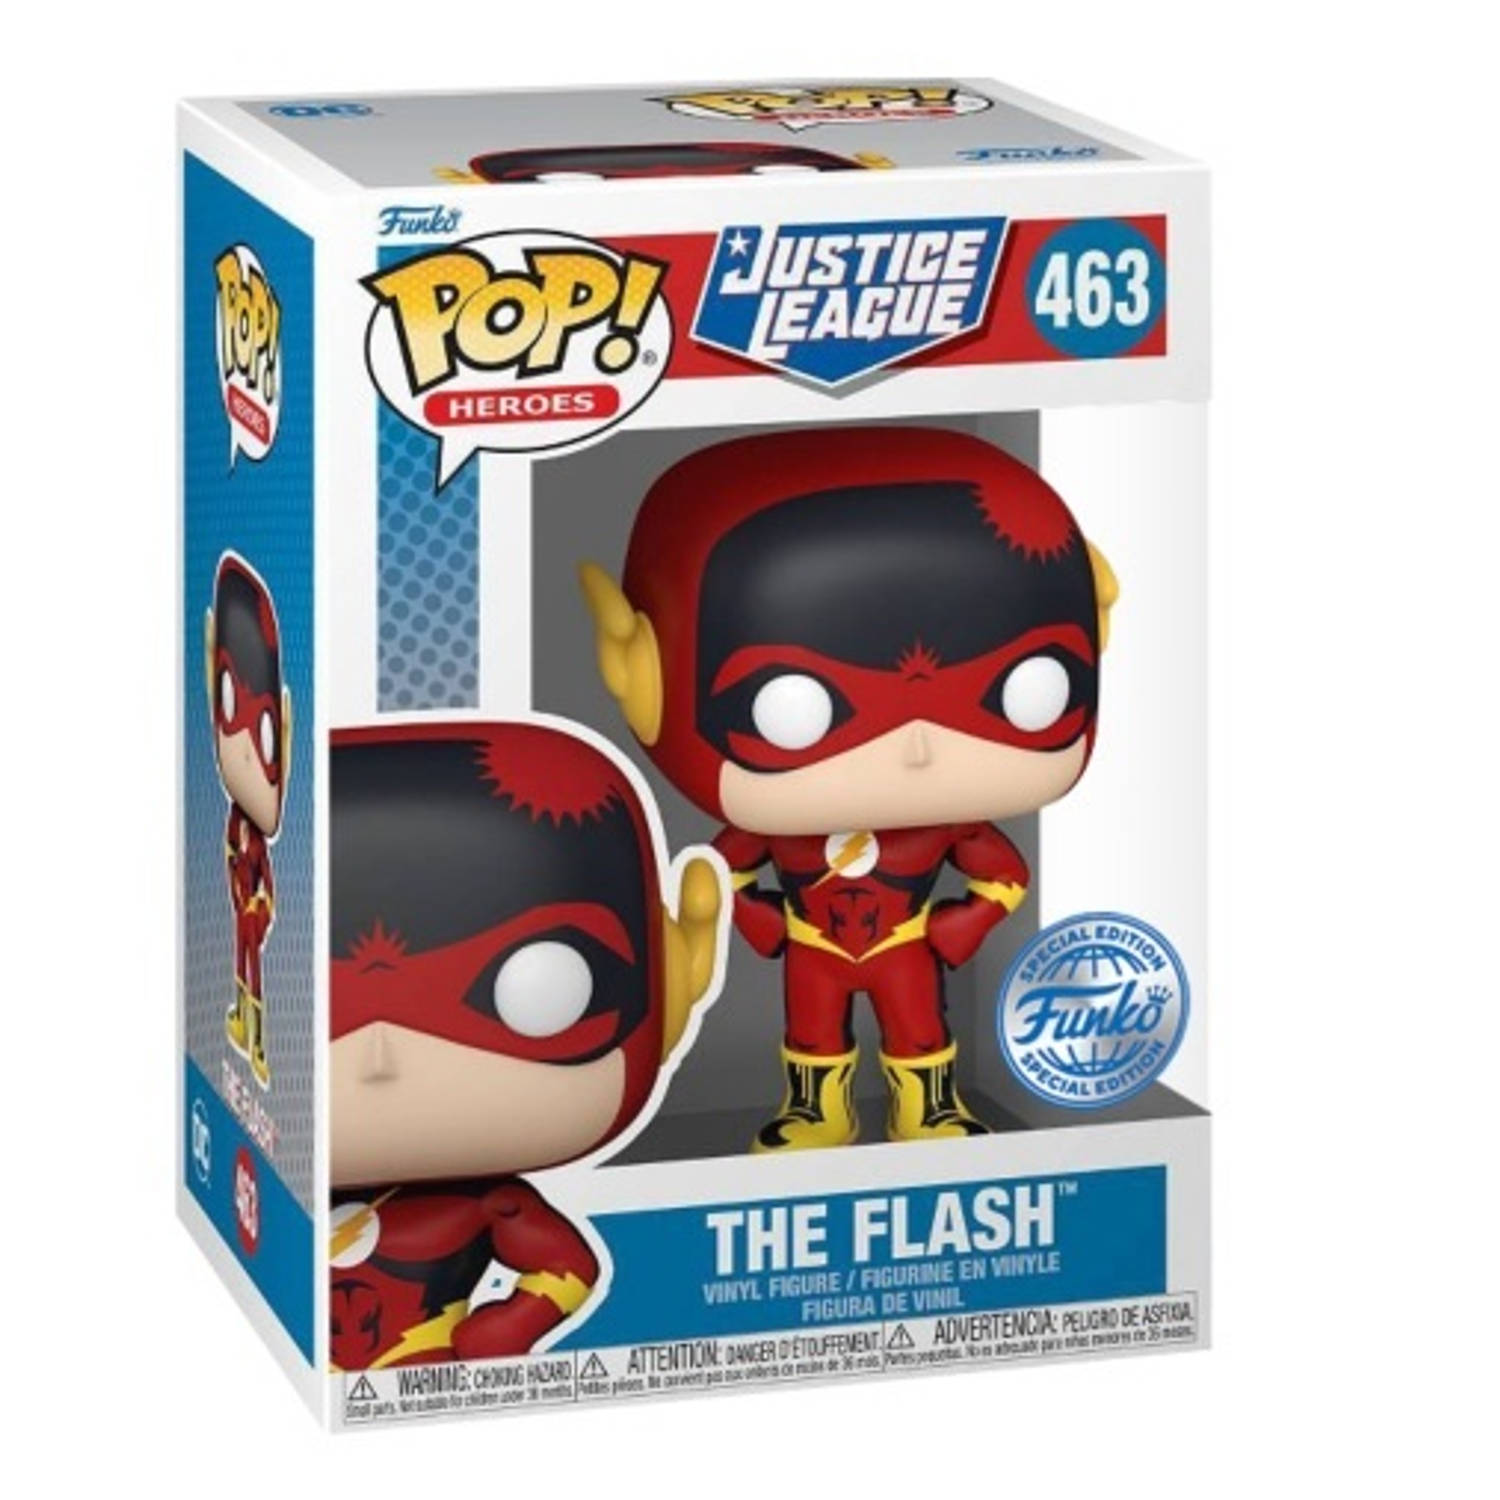 Funko Pop! DC Heroes: Justice League - The Flash (Special Edition) #463 Vinyl Figure